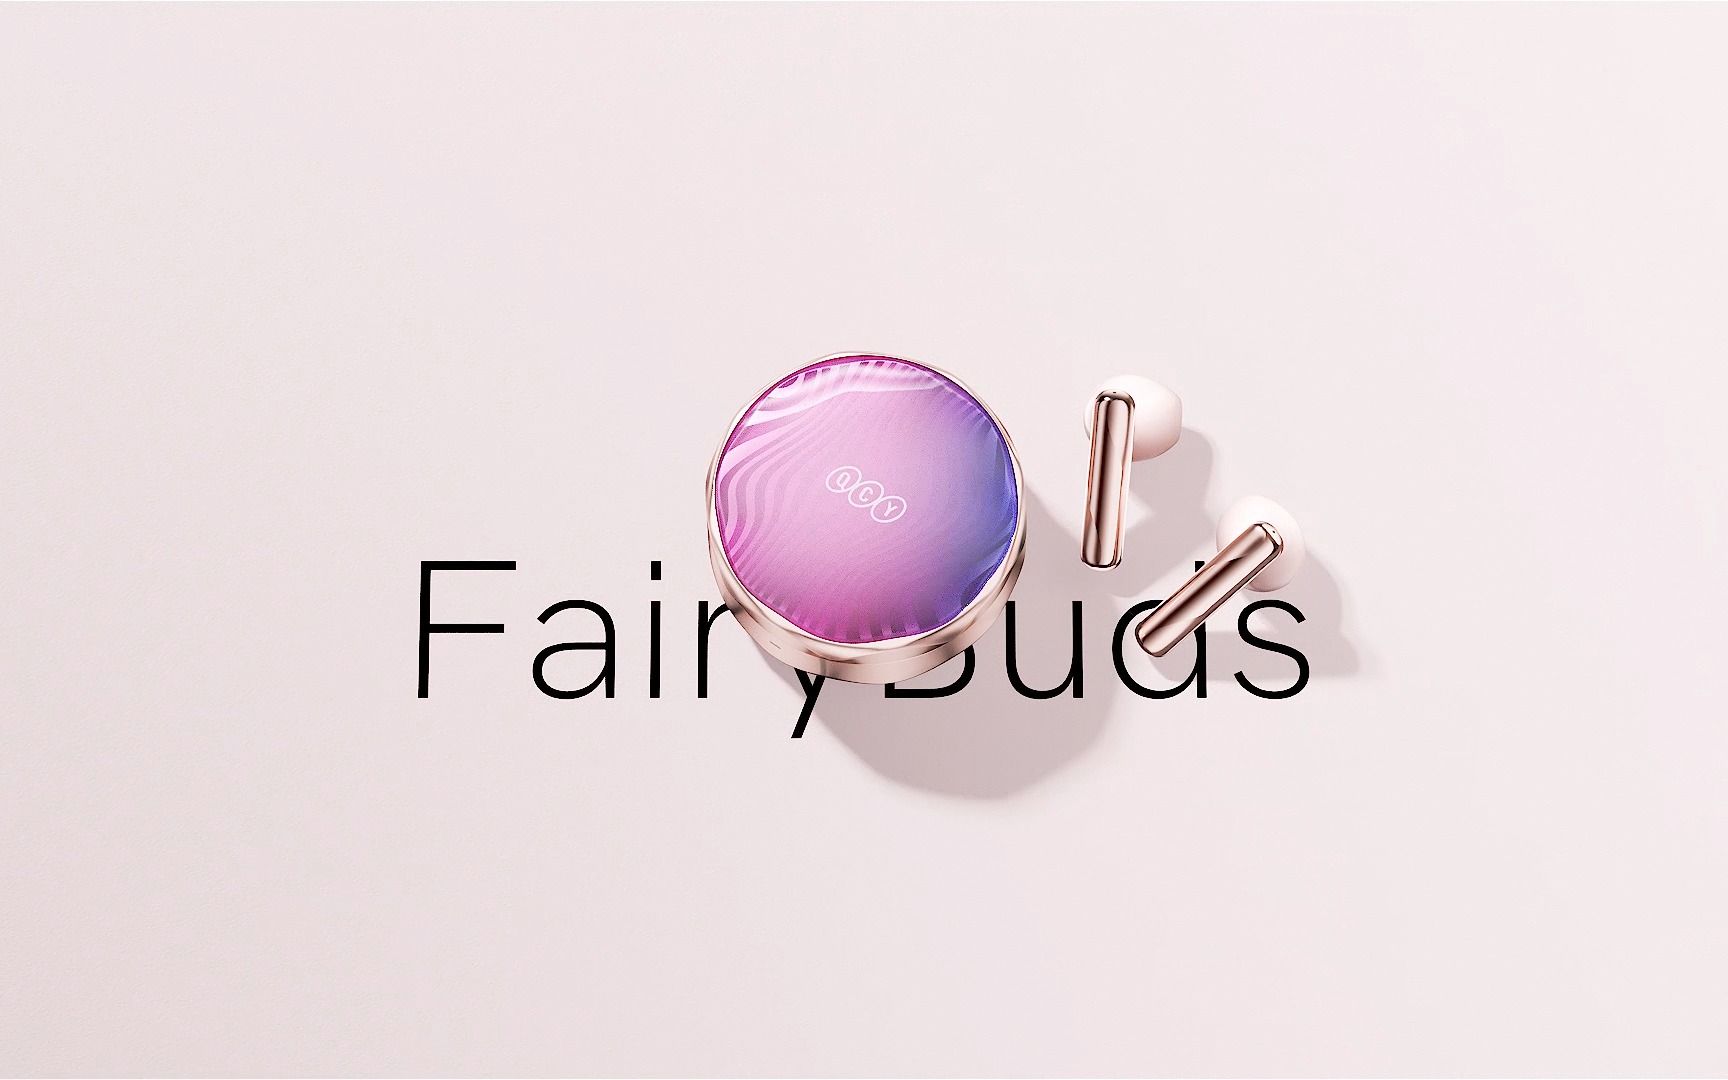 QCY FairyBuds，是你心中的颜值天花板耳机吗？